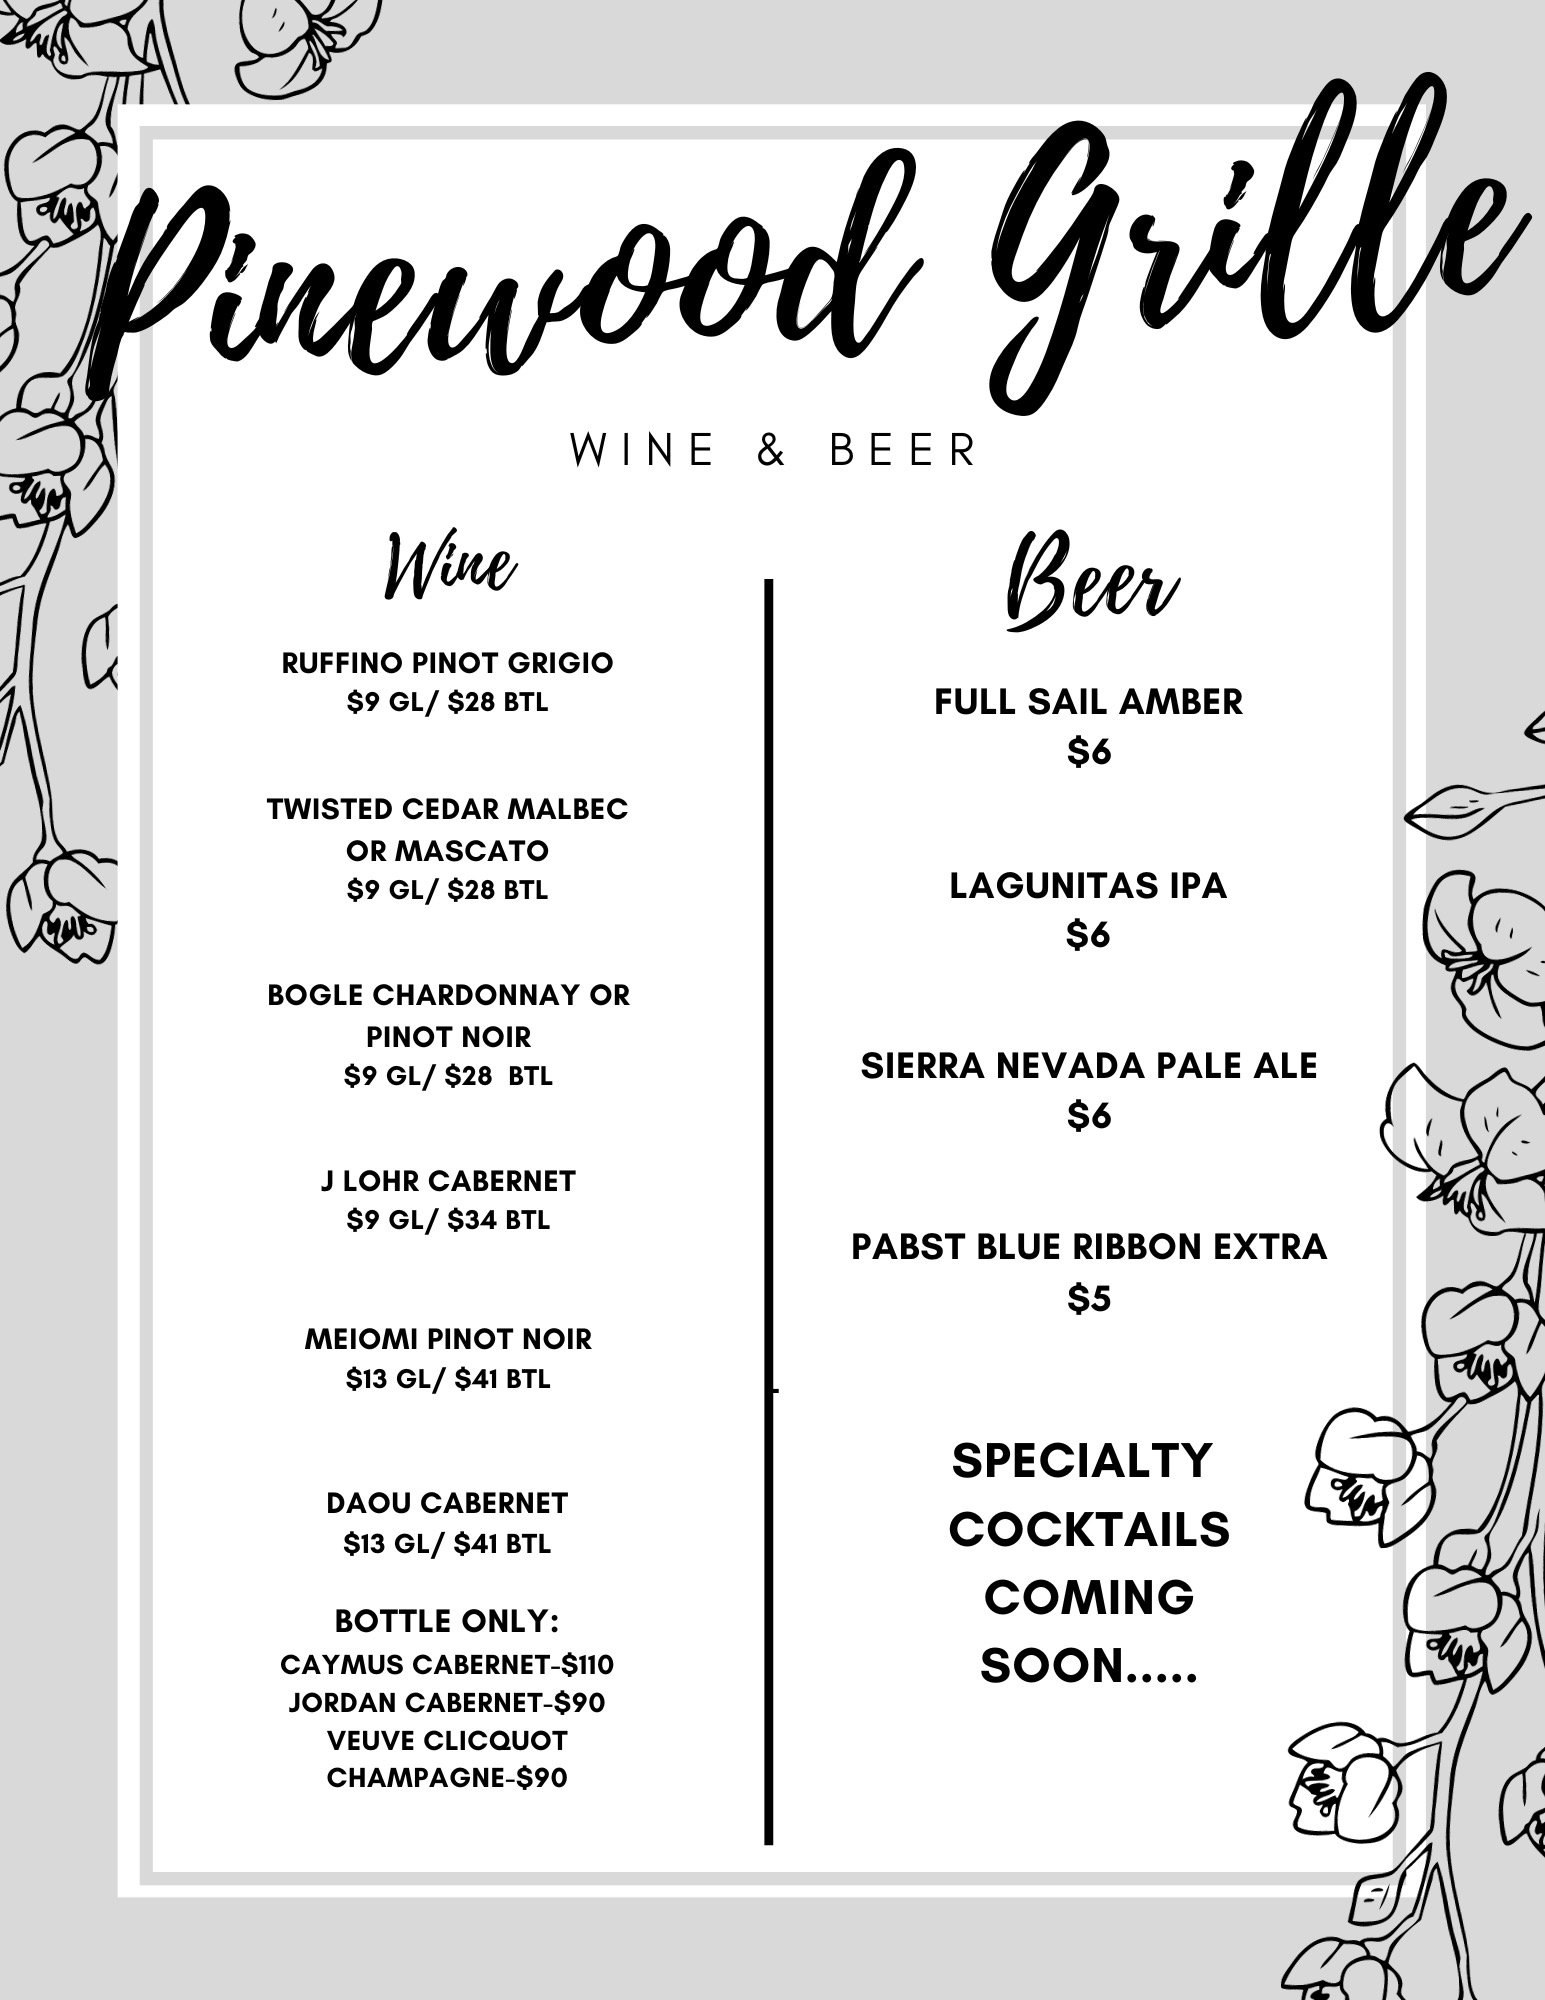 Pinewoods Grille Wine and Beer Menu